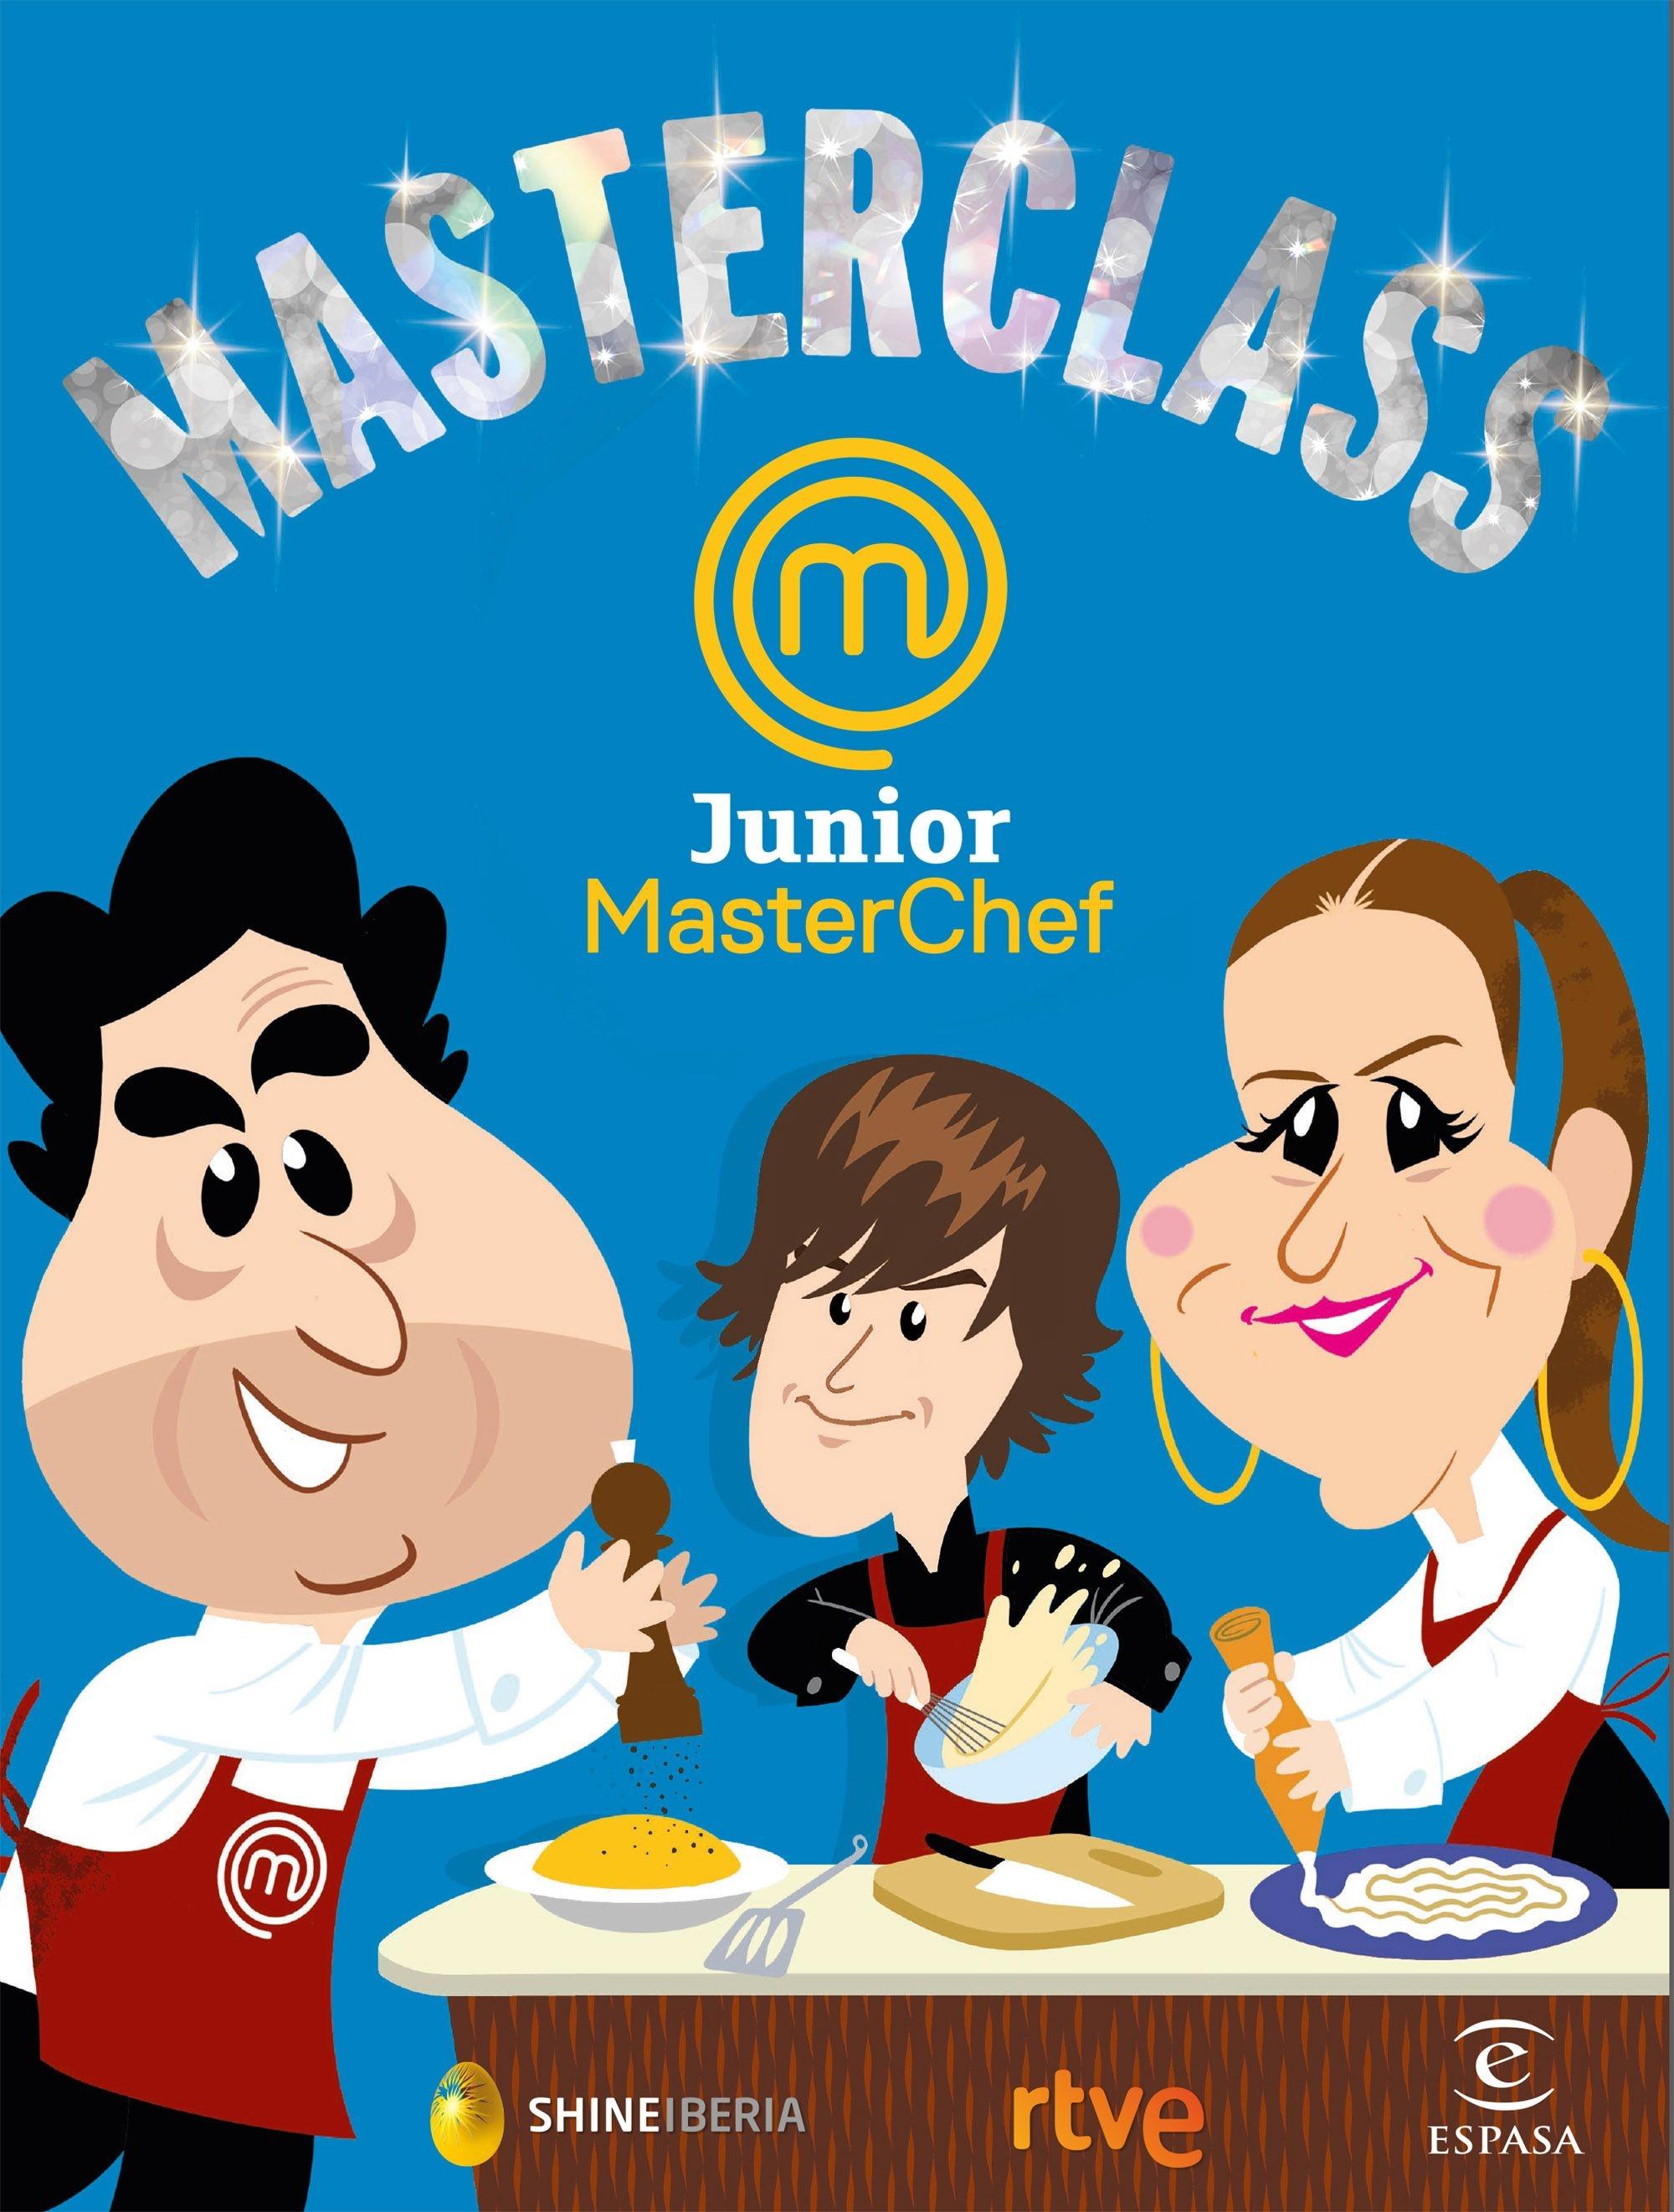 Masterclass "Junior. MasterChef"